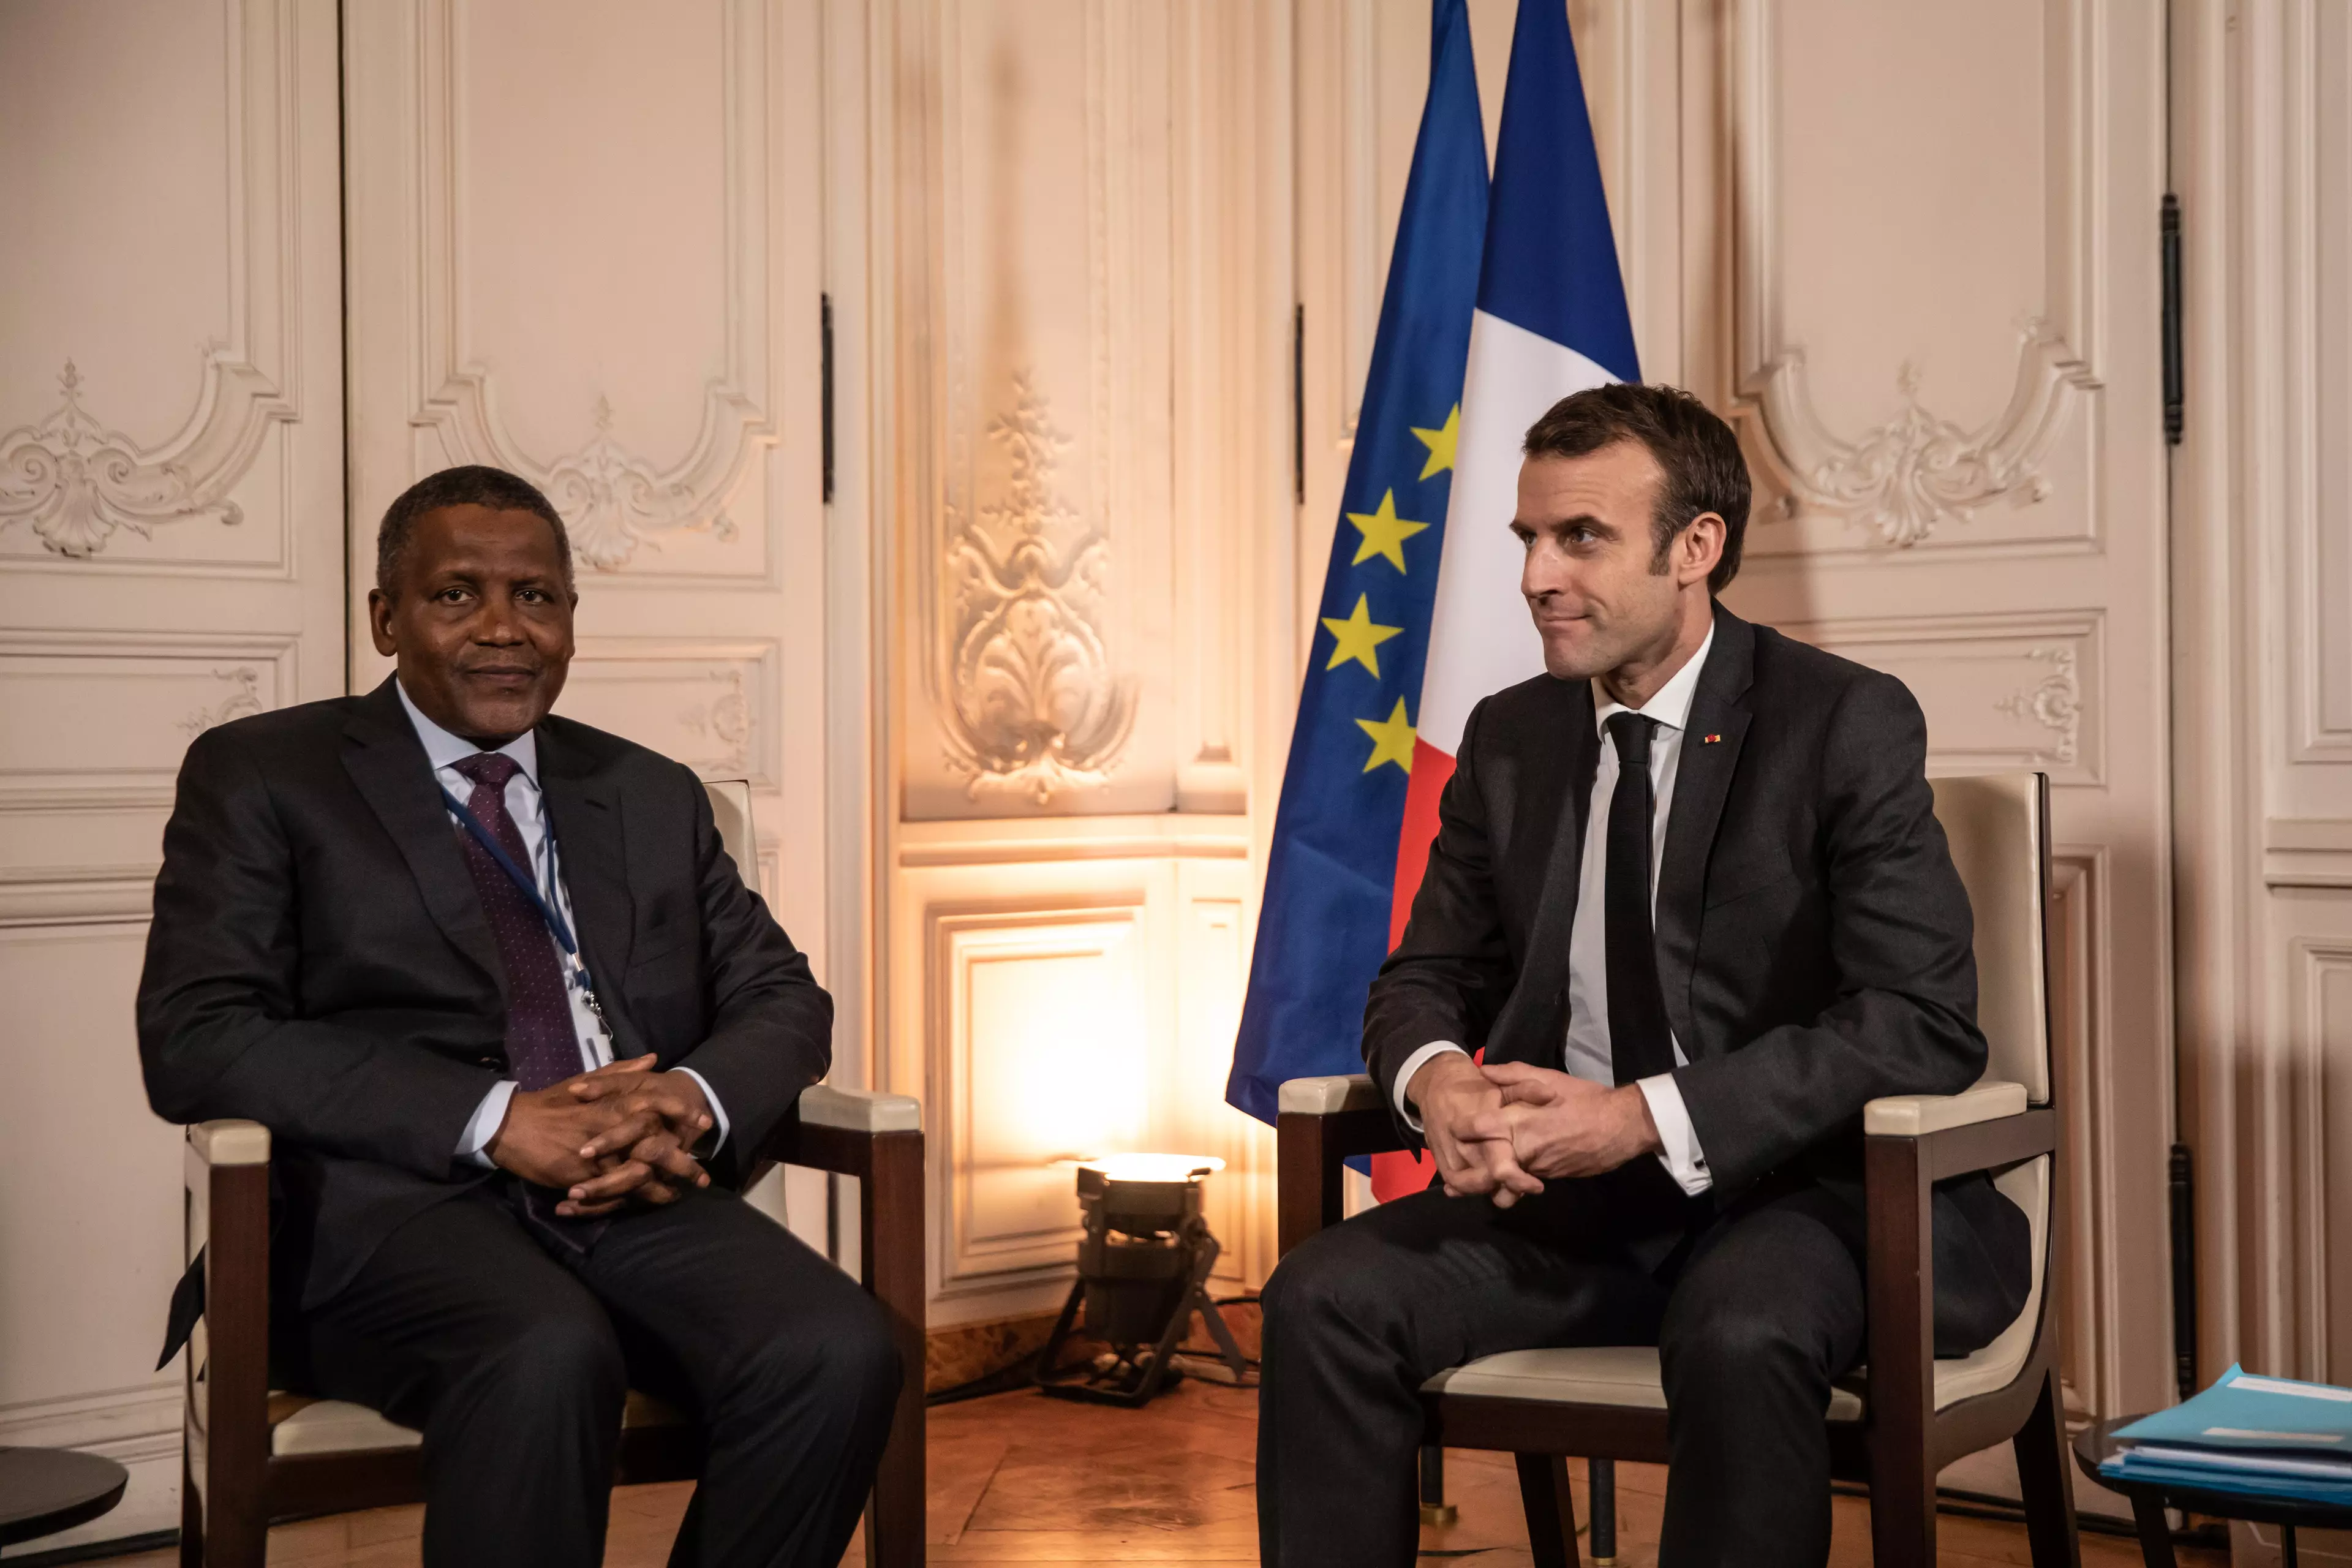 Dangote with France president Emmanuel Macron. Image: PA Images